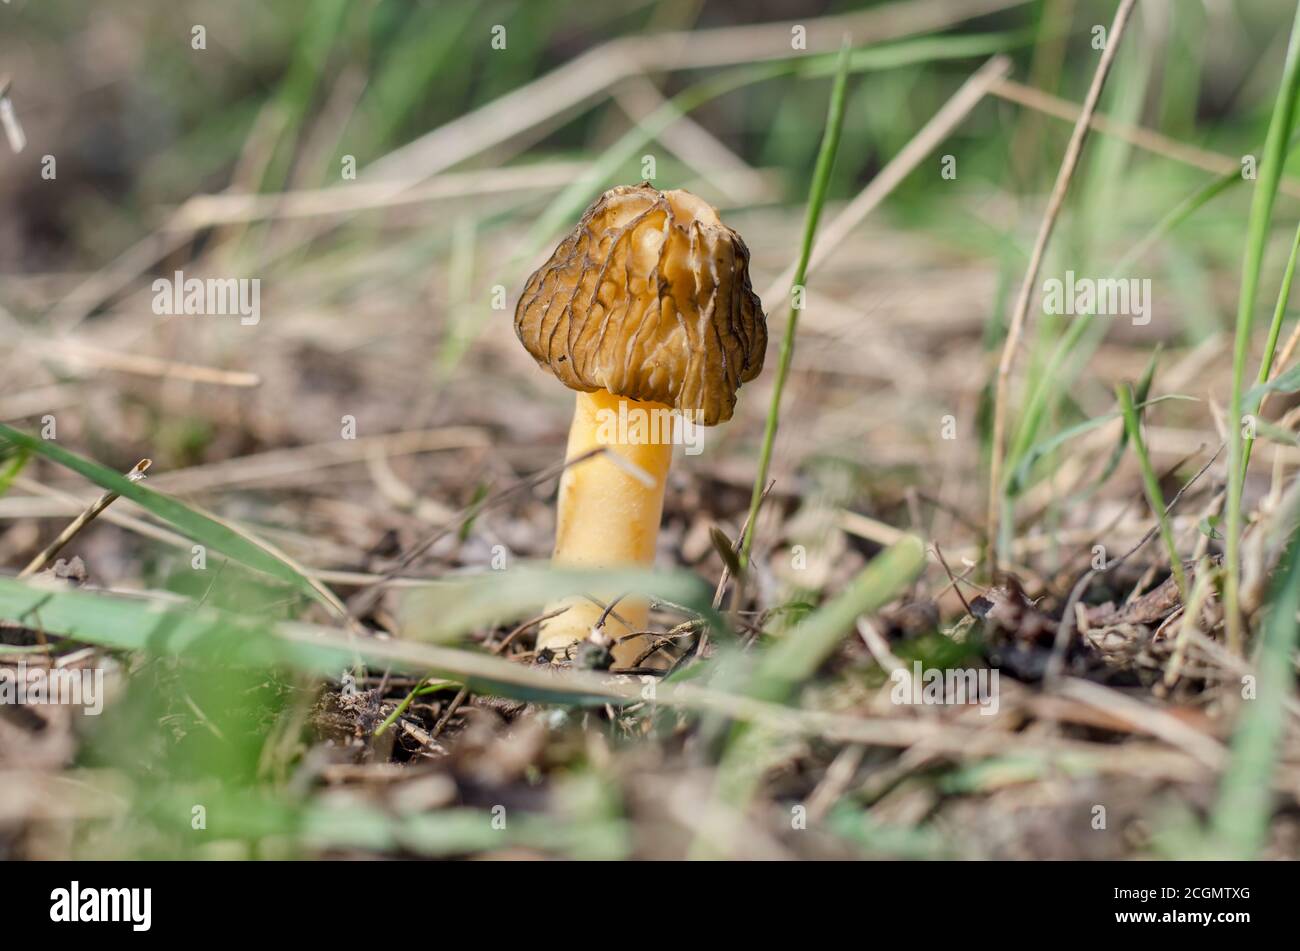 Fake Mushrooms Small Garden Stock Photo 662684743